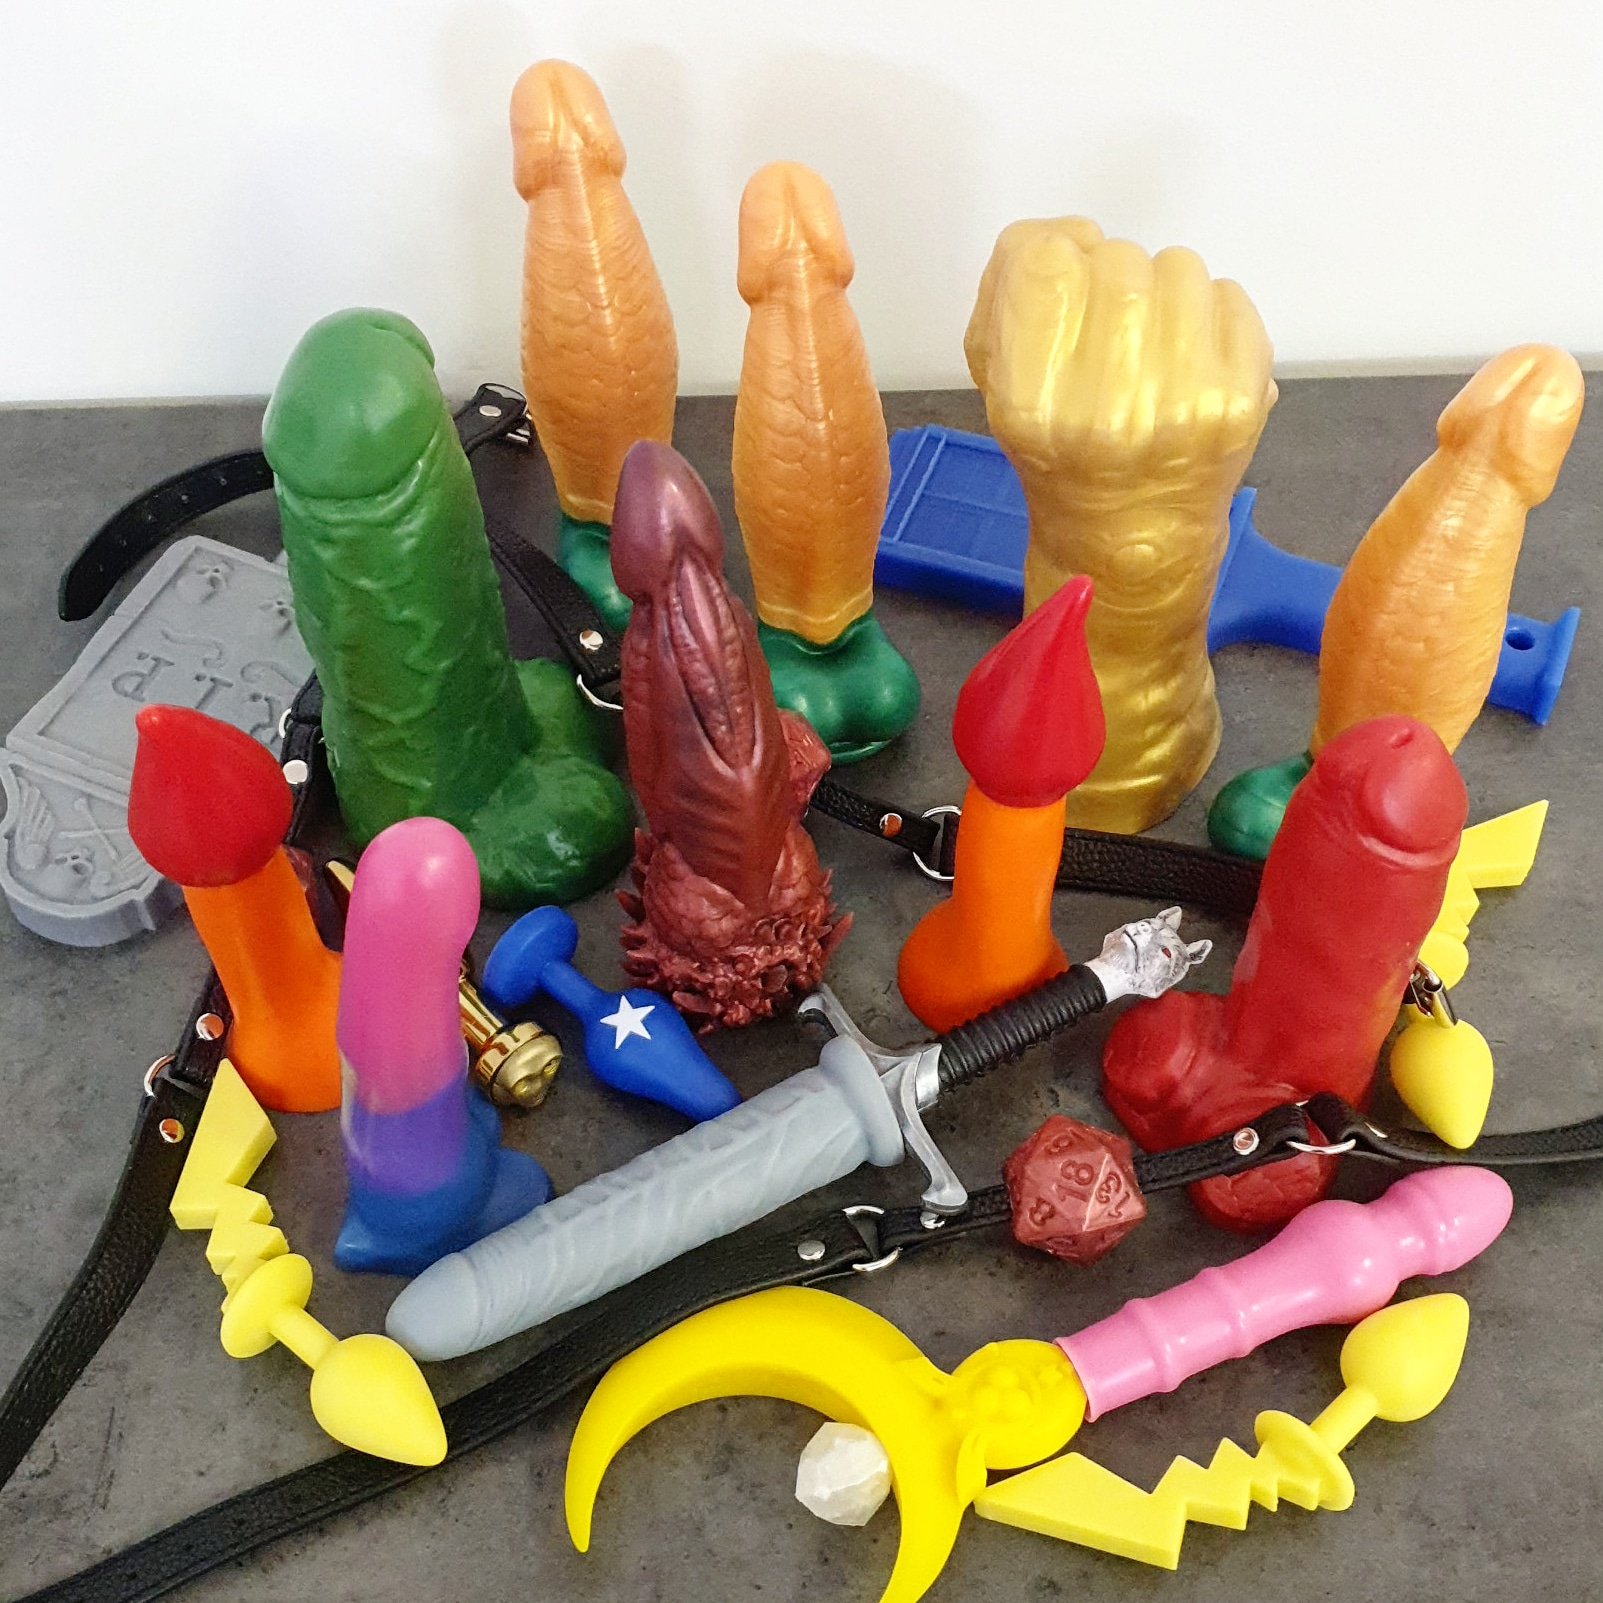 Sex toy haul